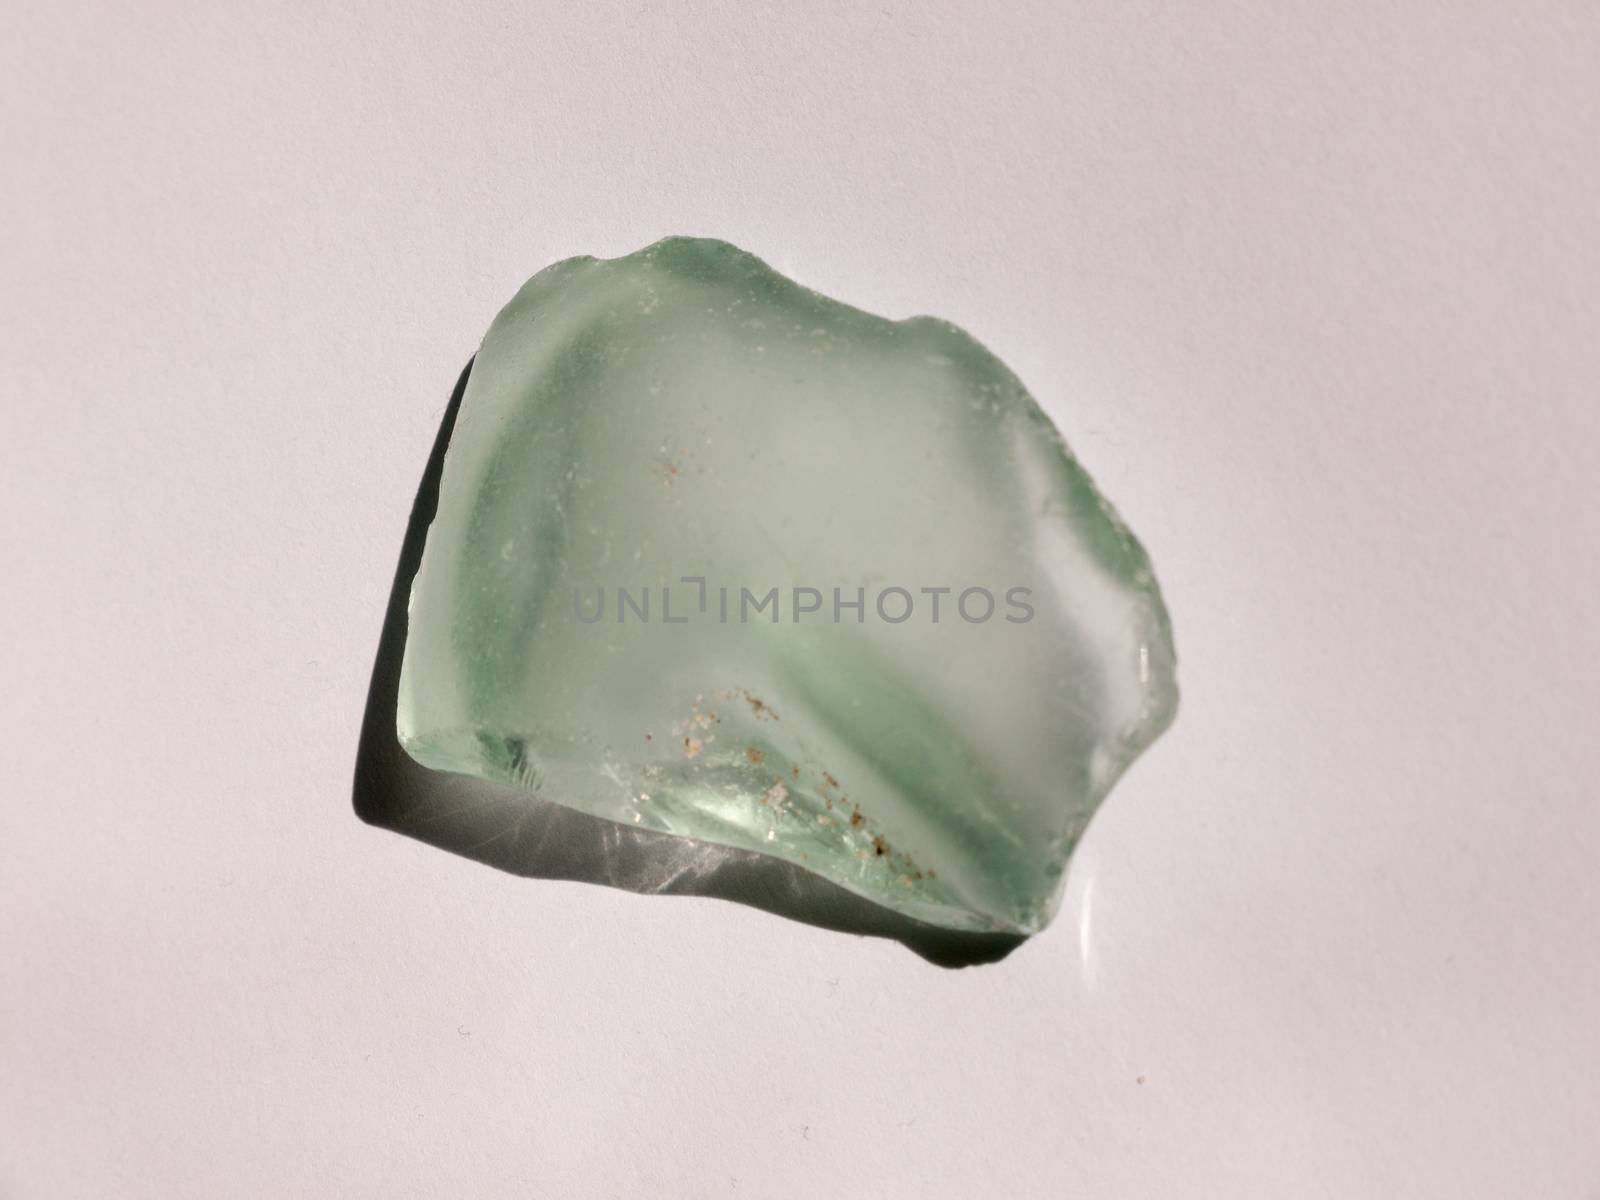 A clear crystal glass rock found on a beach